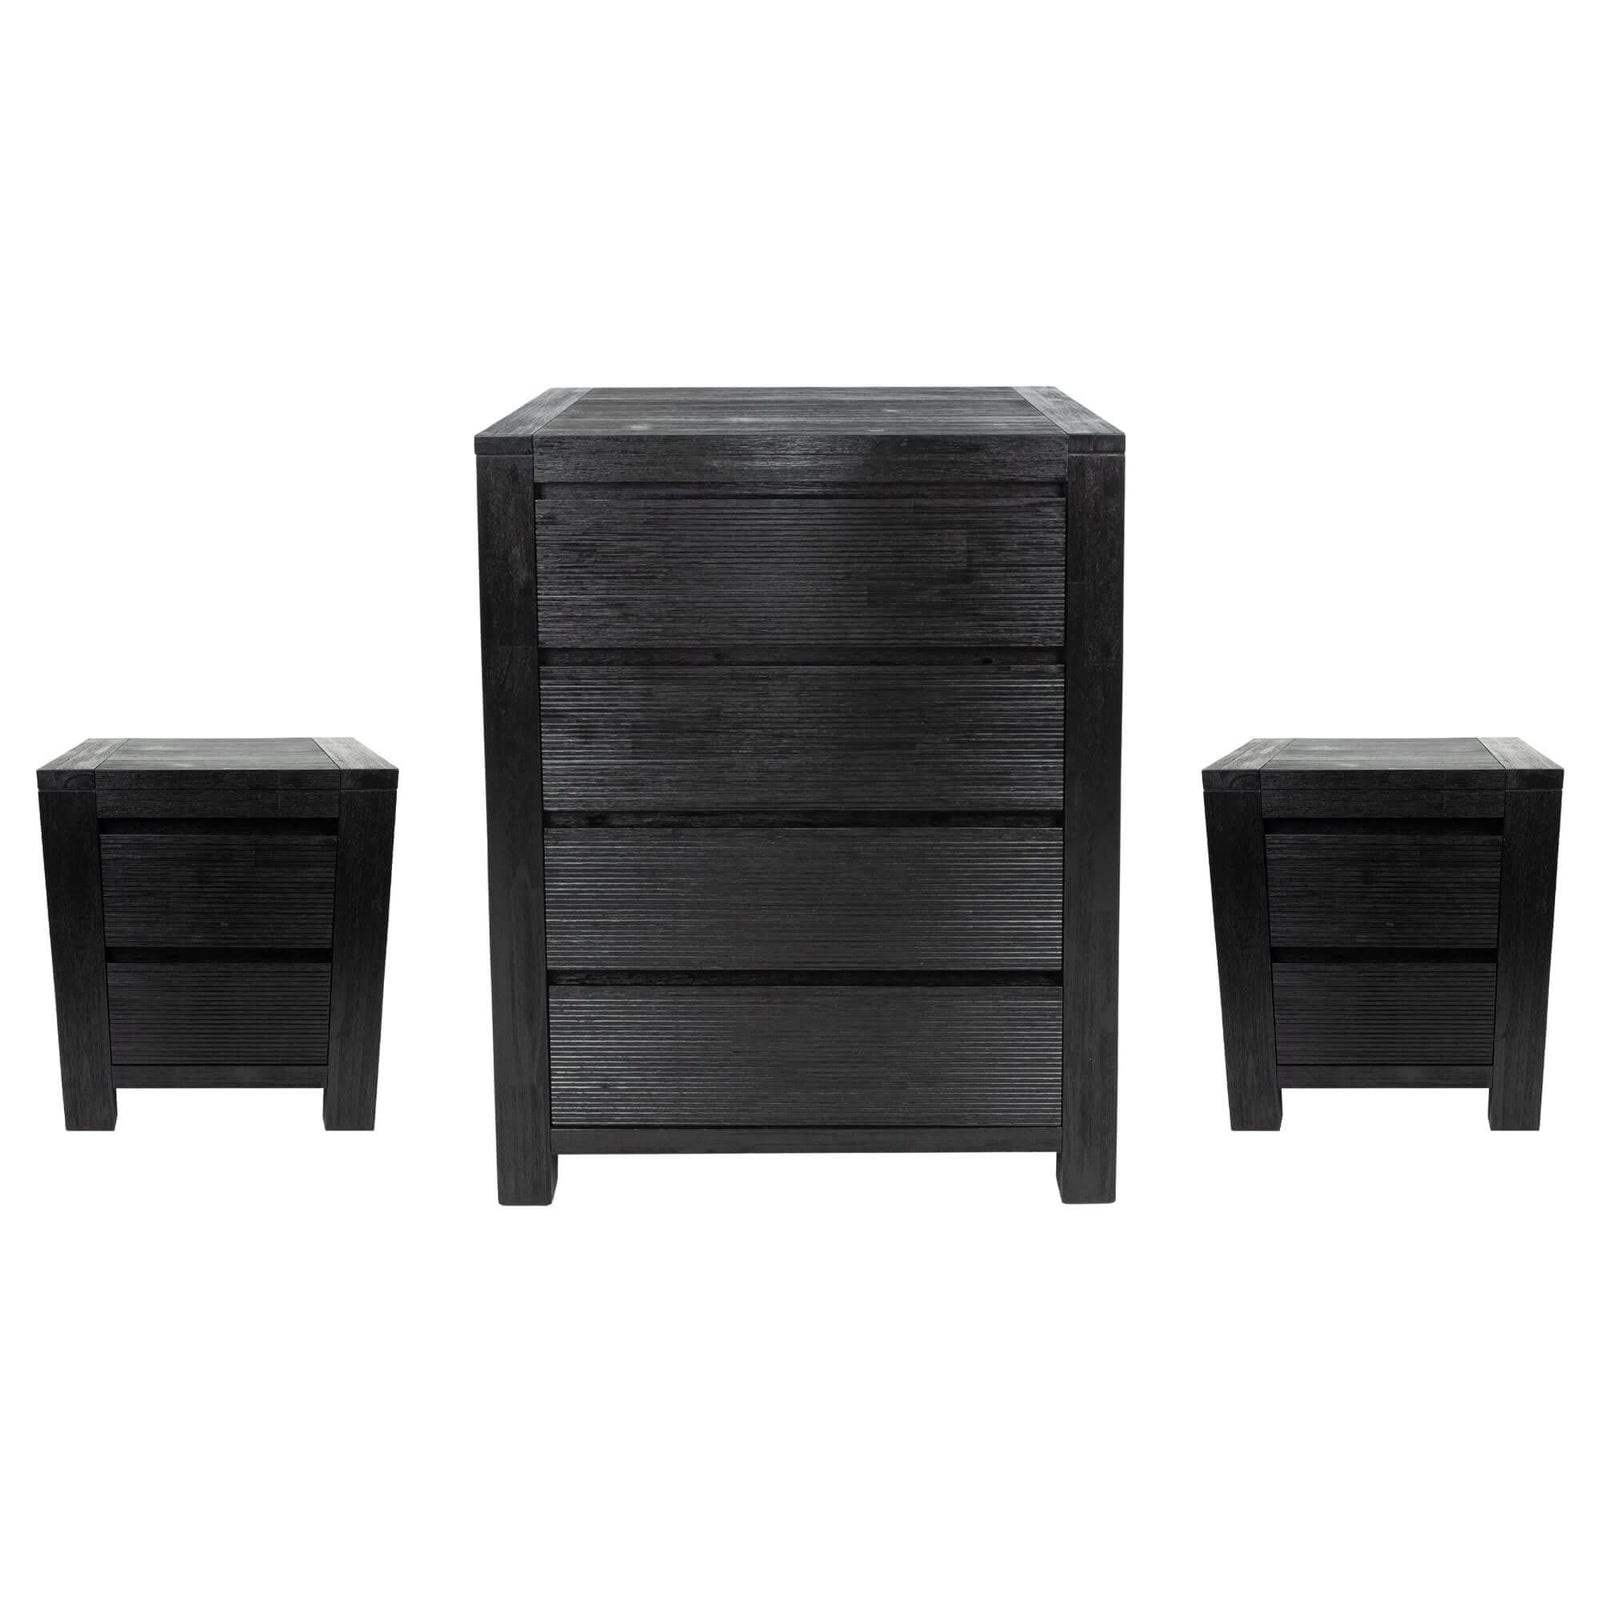 Tofino Black Bedroom Set - 3pc Chic Storage Furniture-Upinteriors